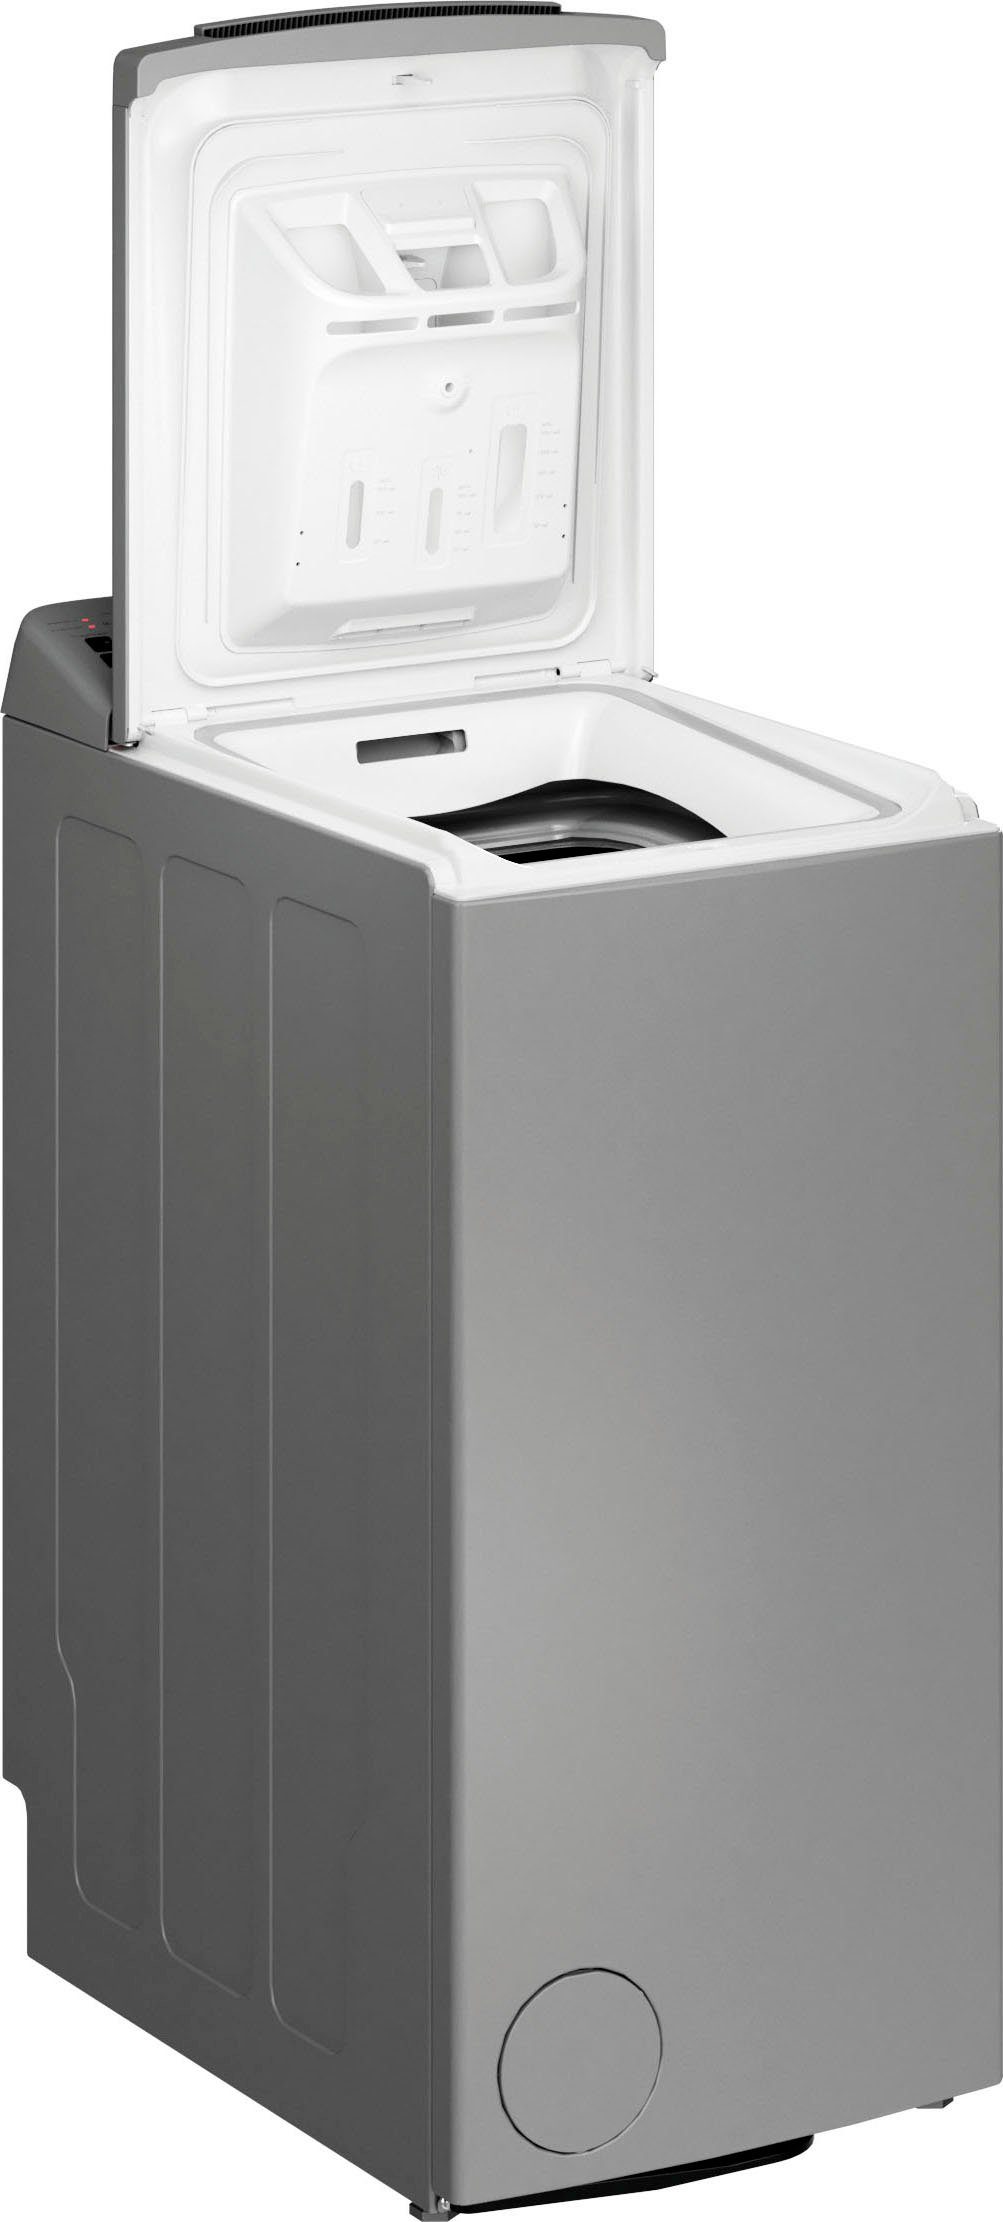 BAUKNECHT Waschmaschine Toplader WMT U/min 1300 kg, 6,5 6513 D4